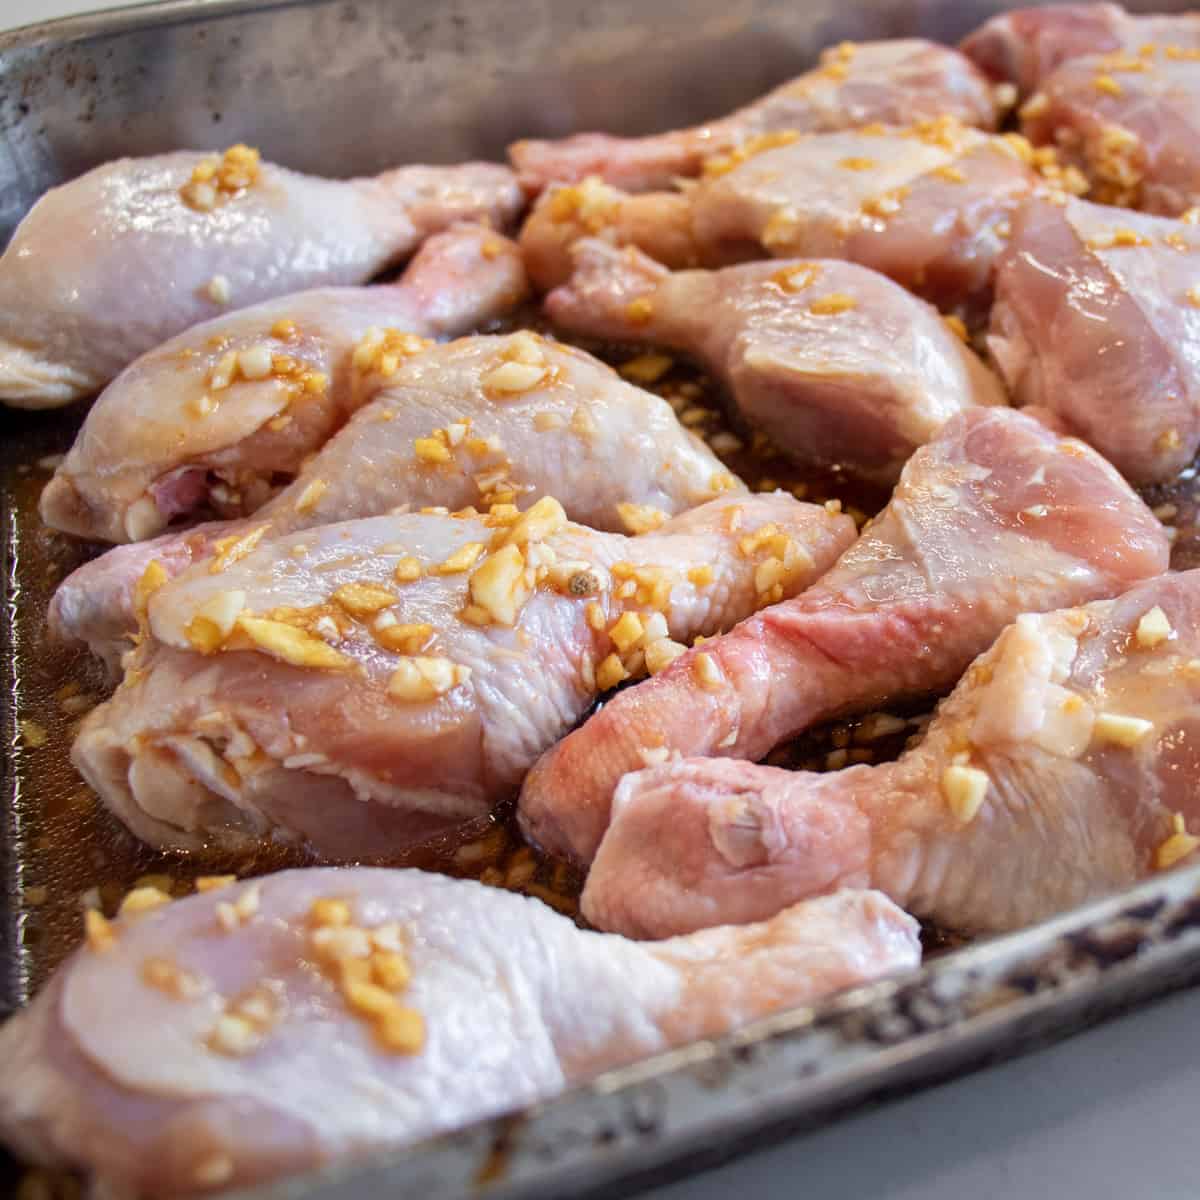 Raw chicken drumsticks in a baking pan.